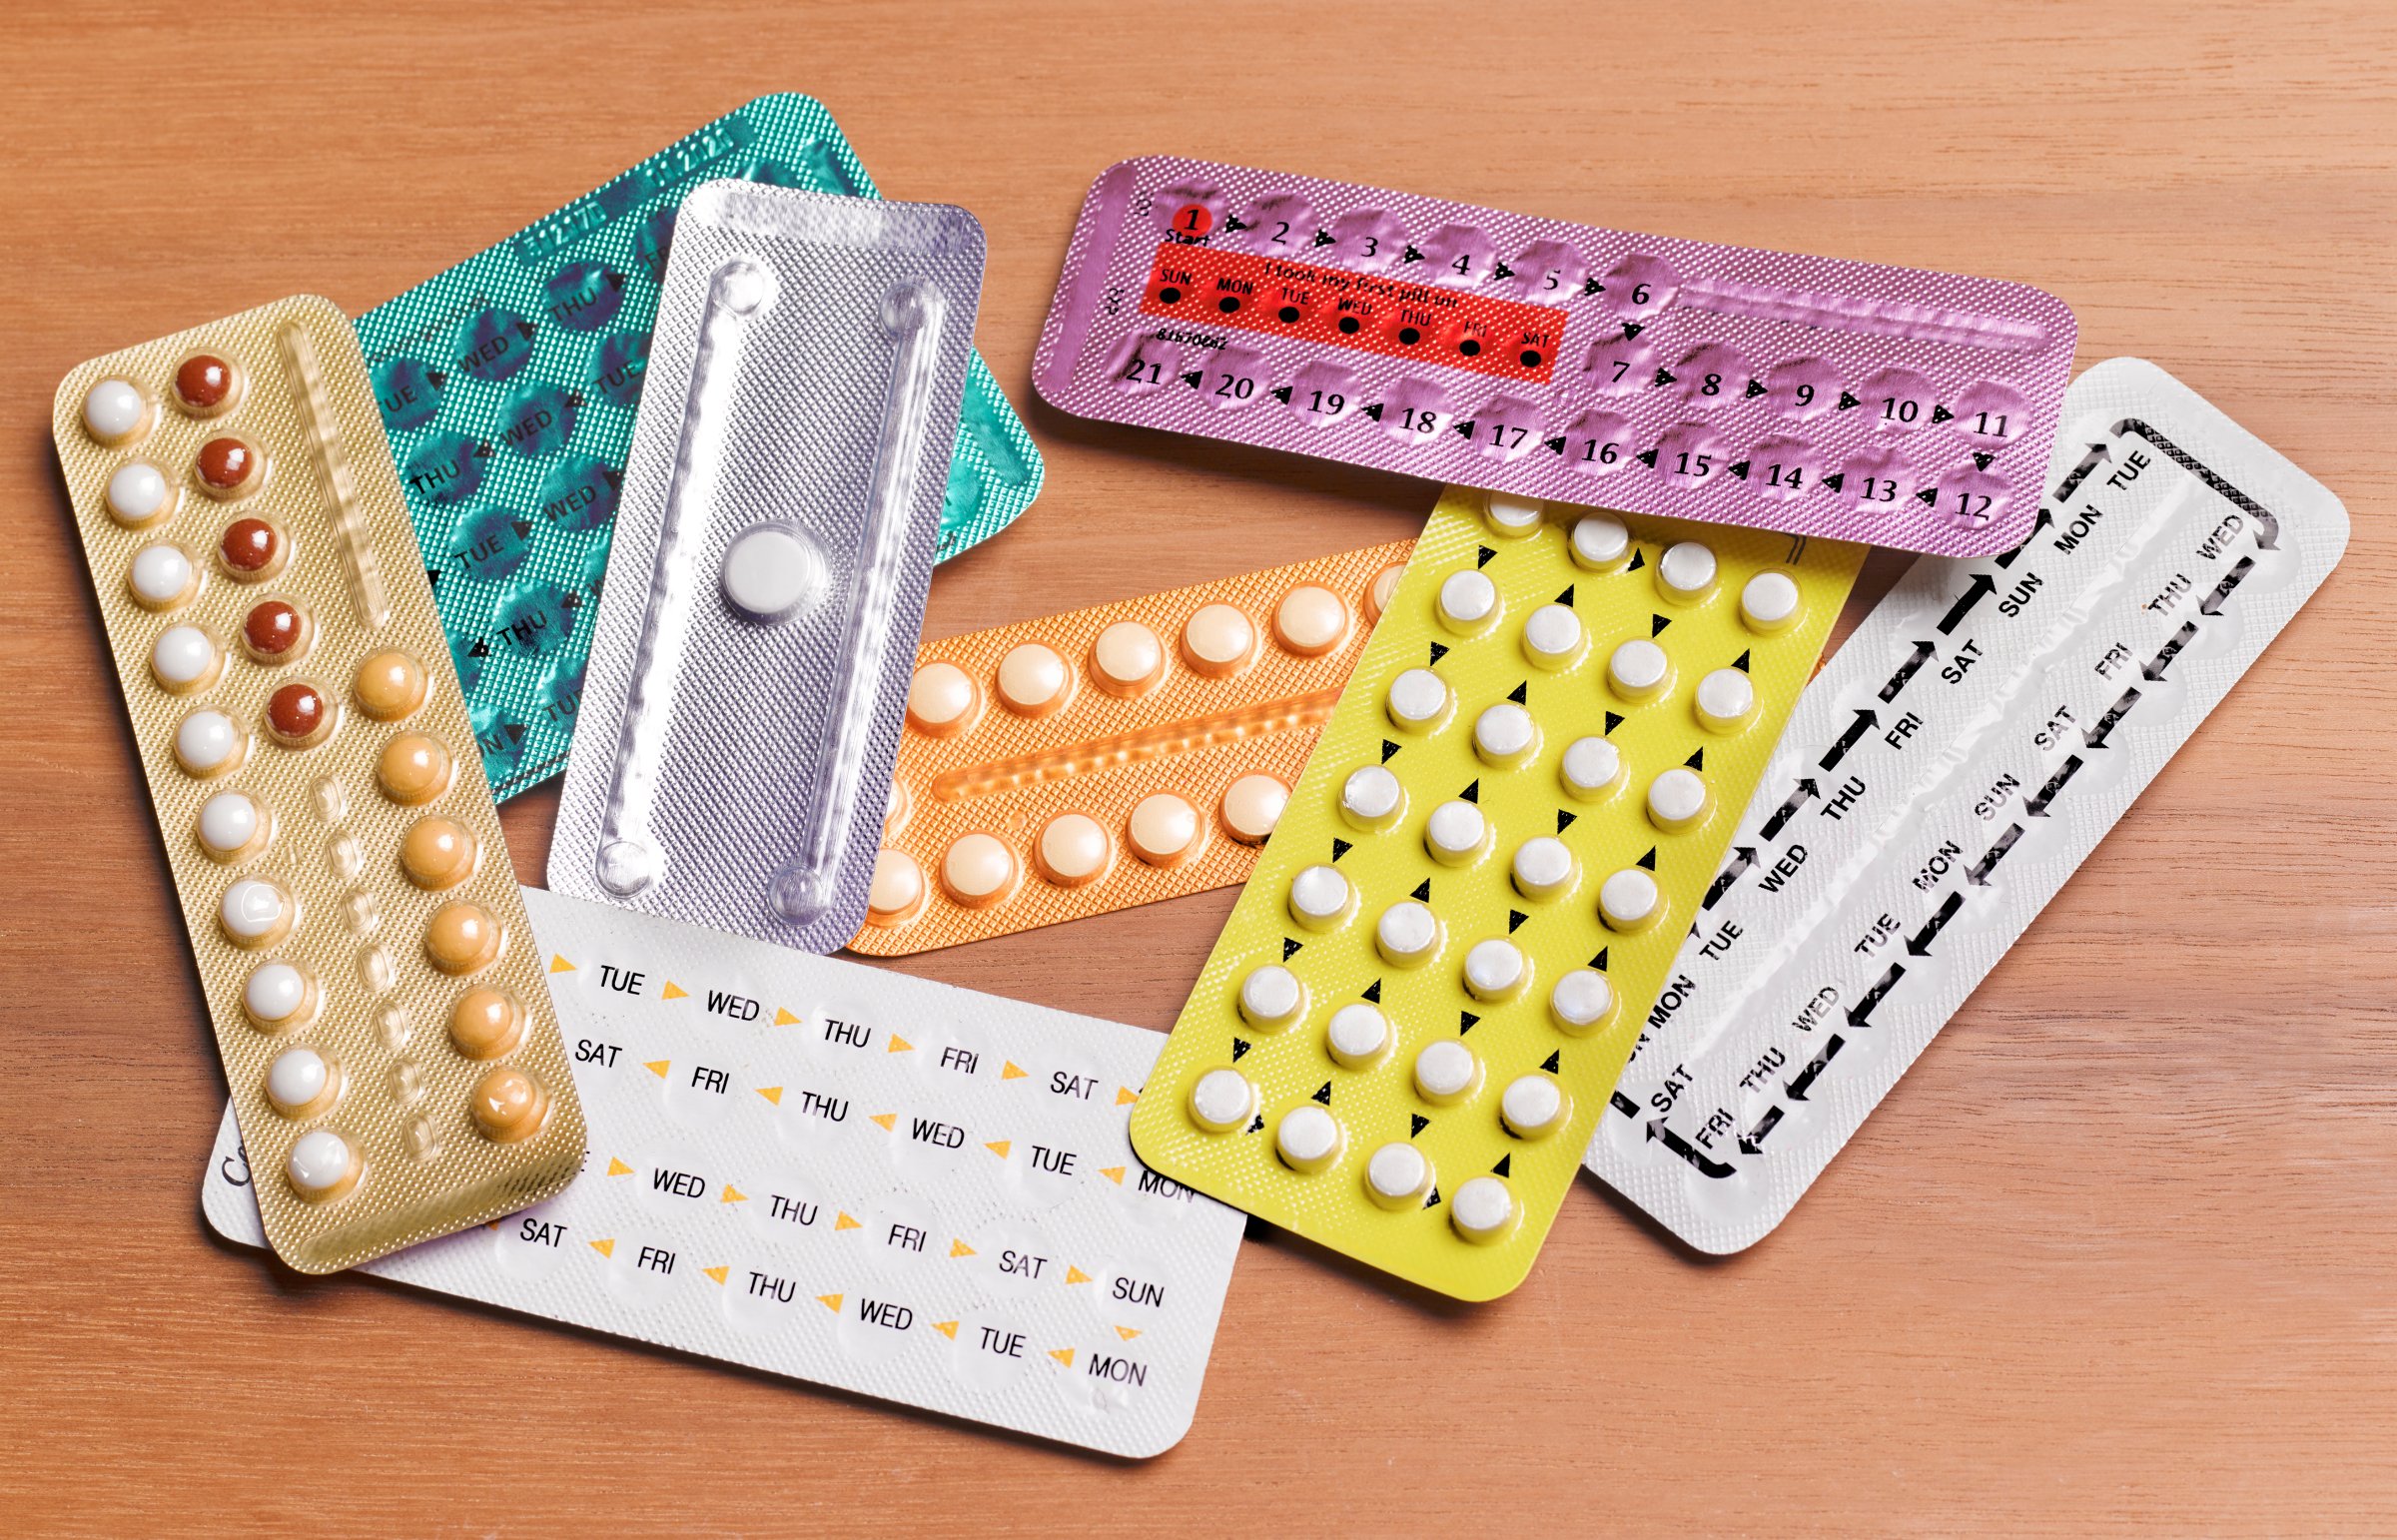 Hormonal birth control pills